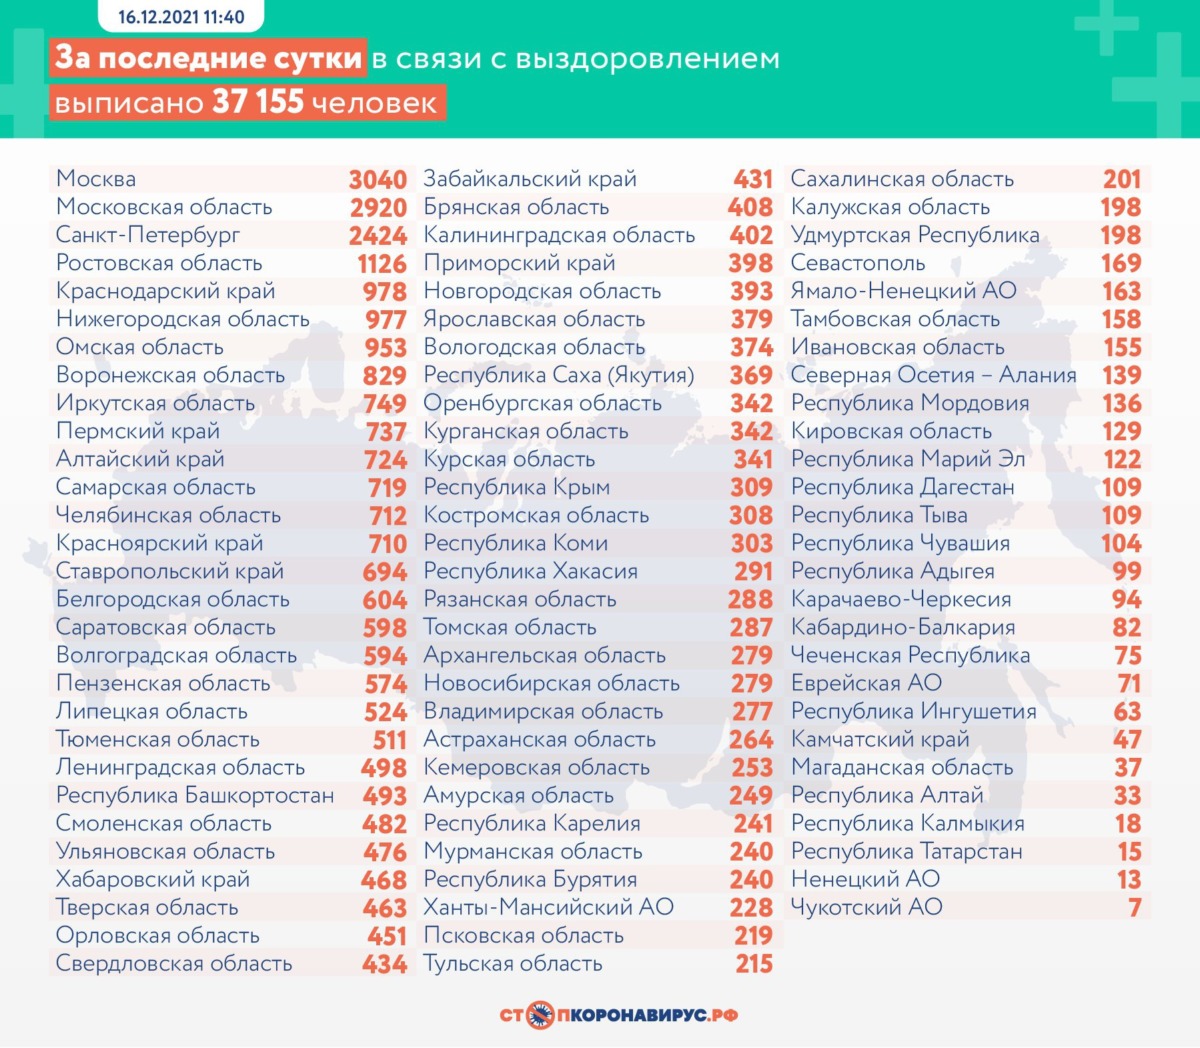 Оперативная статистика по коронавирусу в России на 16 декабря